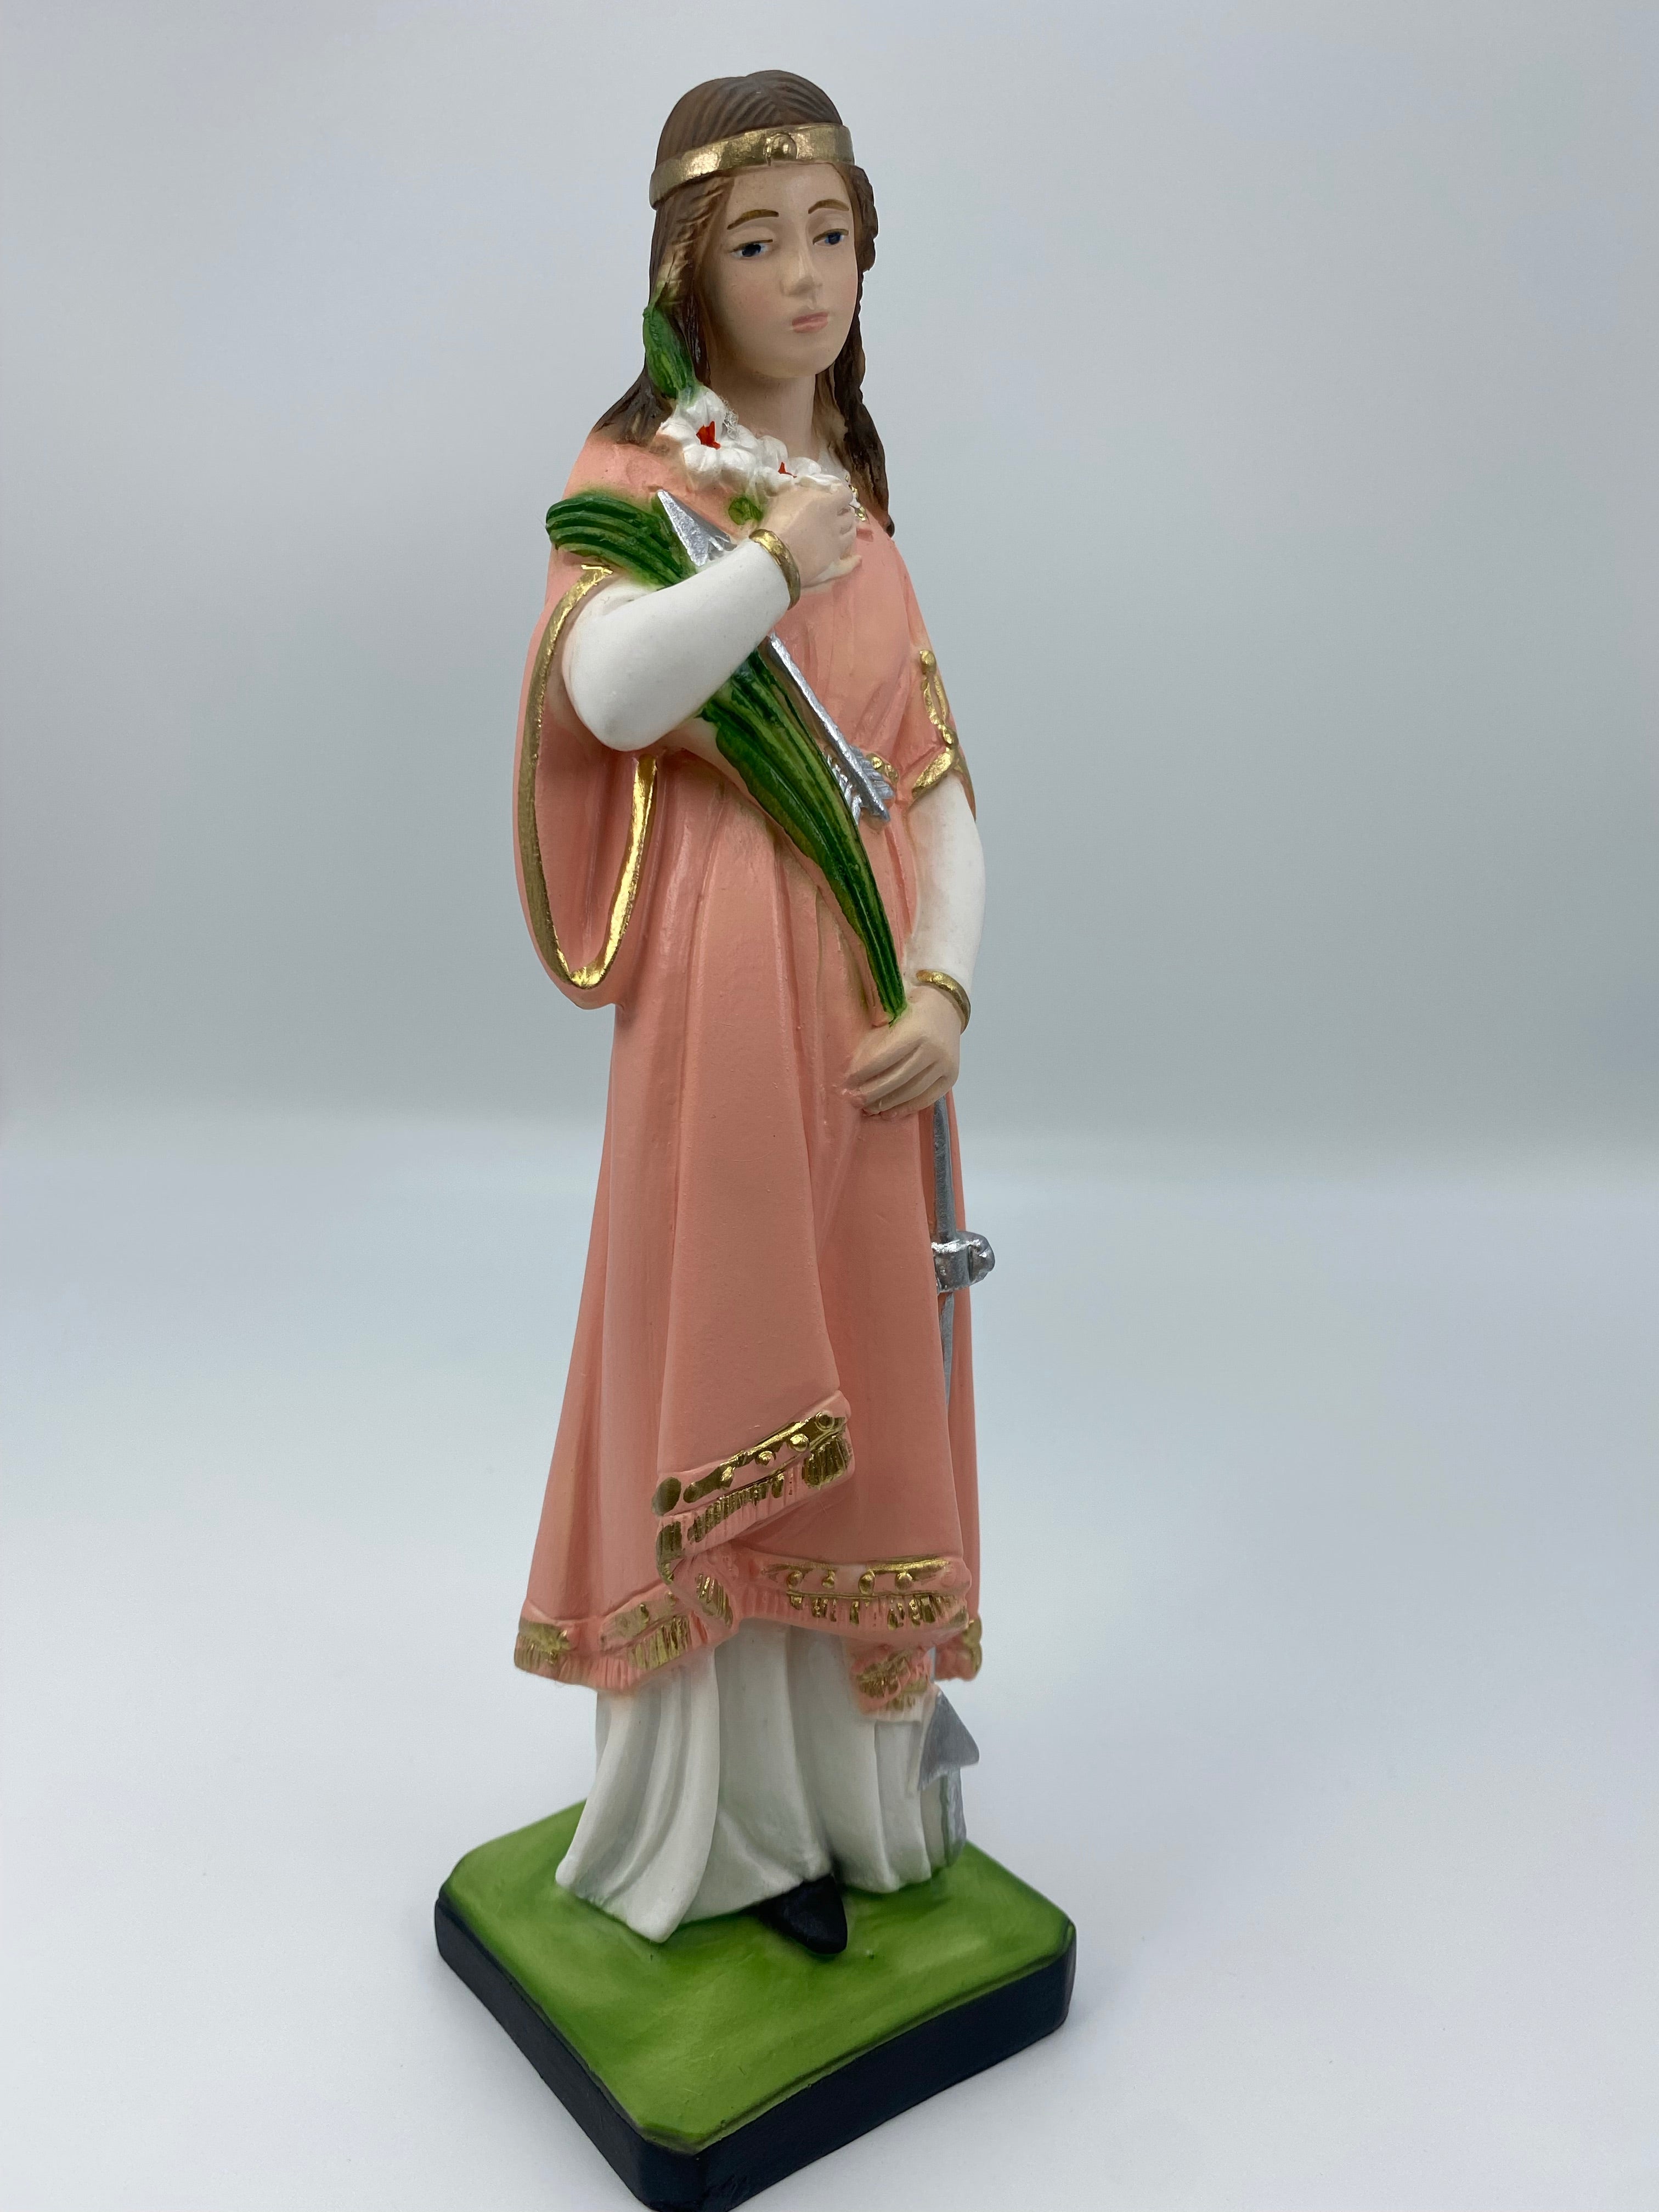 The Faith Gift Shop Saint Philomena statue - Hand Painted in Italy - Our Tuscany Collection -Estatua de San Filomena